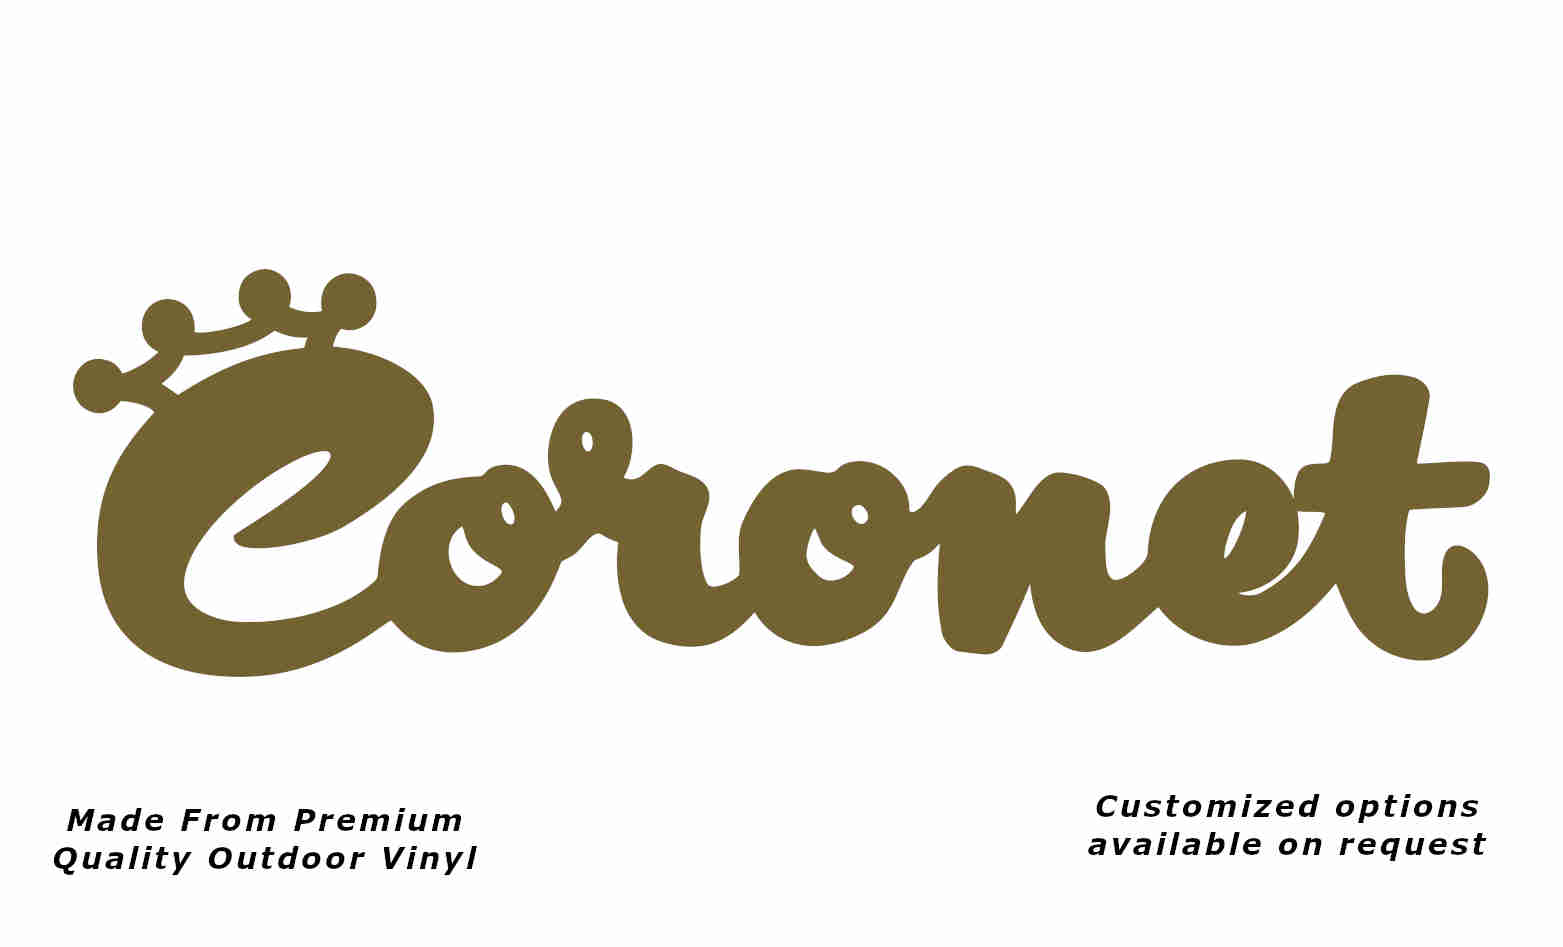 Coronet plain caravan replacement vinyl decal sticker in gold.